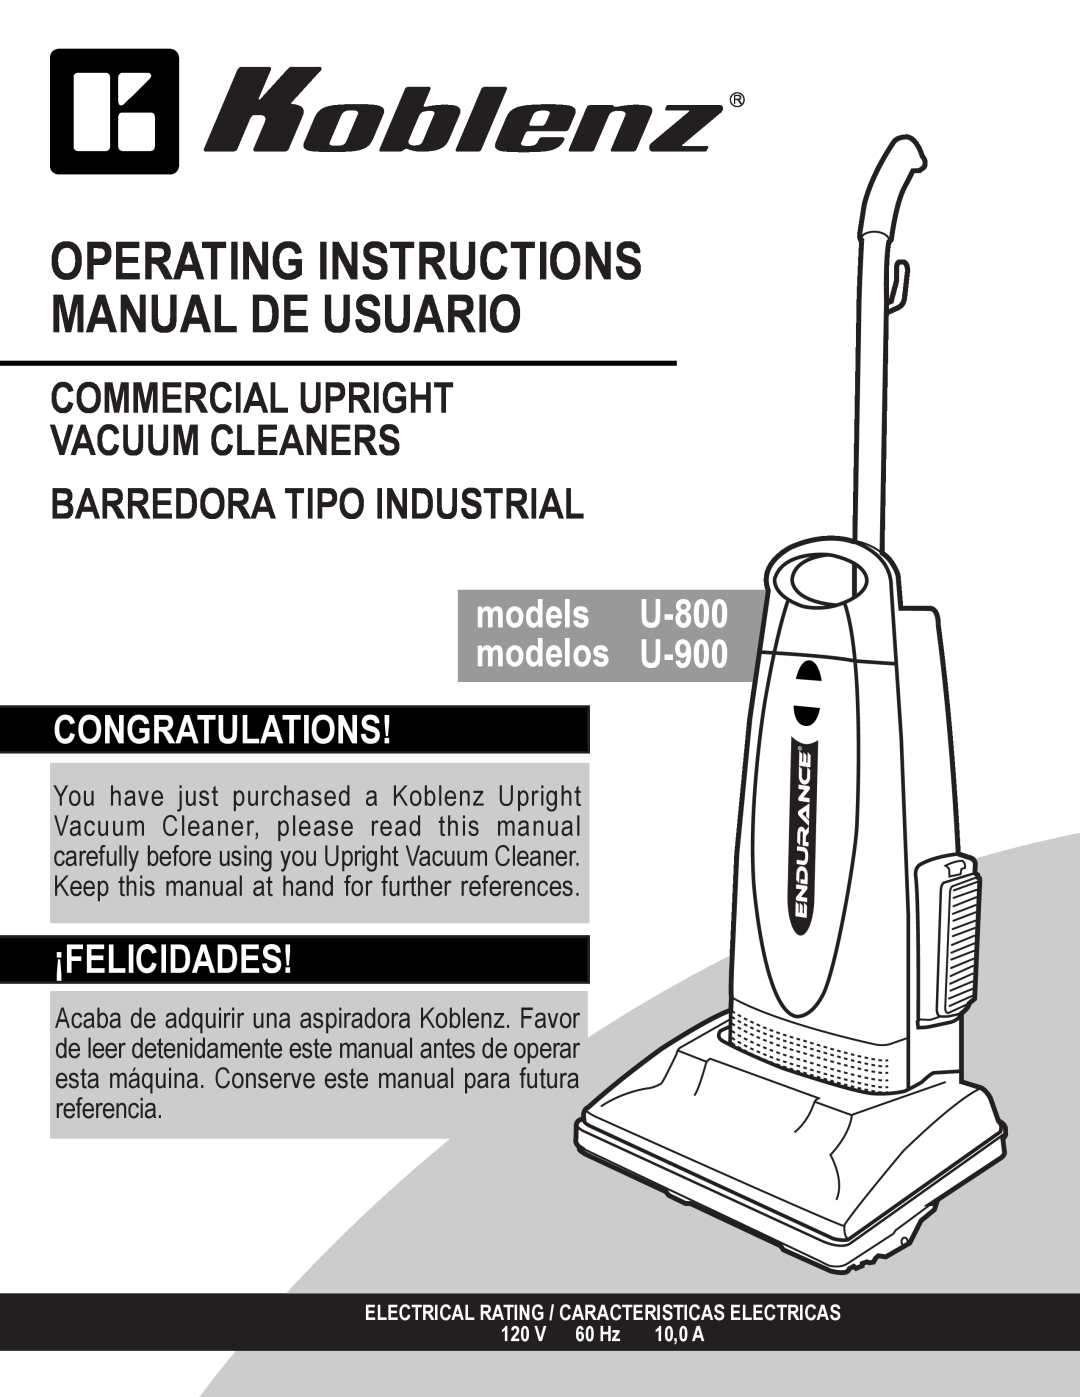 Koblenz/Thorne Electric U-800, U-900 manual Operating Instructions Manual De Usuario, Commercial Upright Vacuum Cleaners 